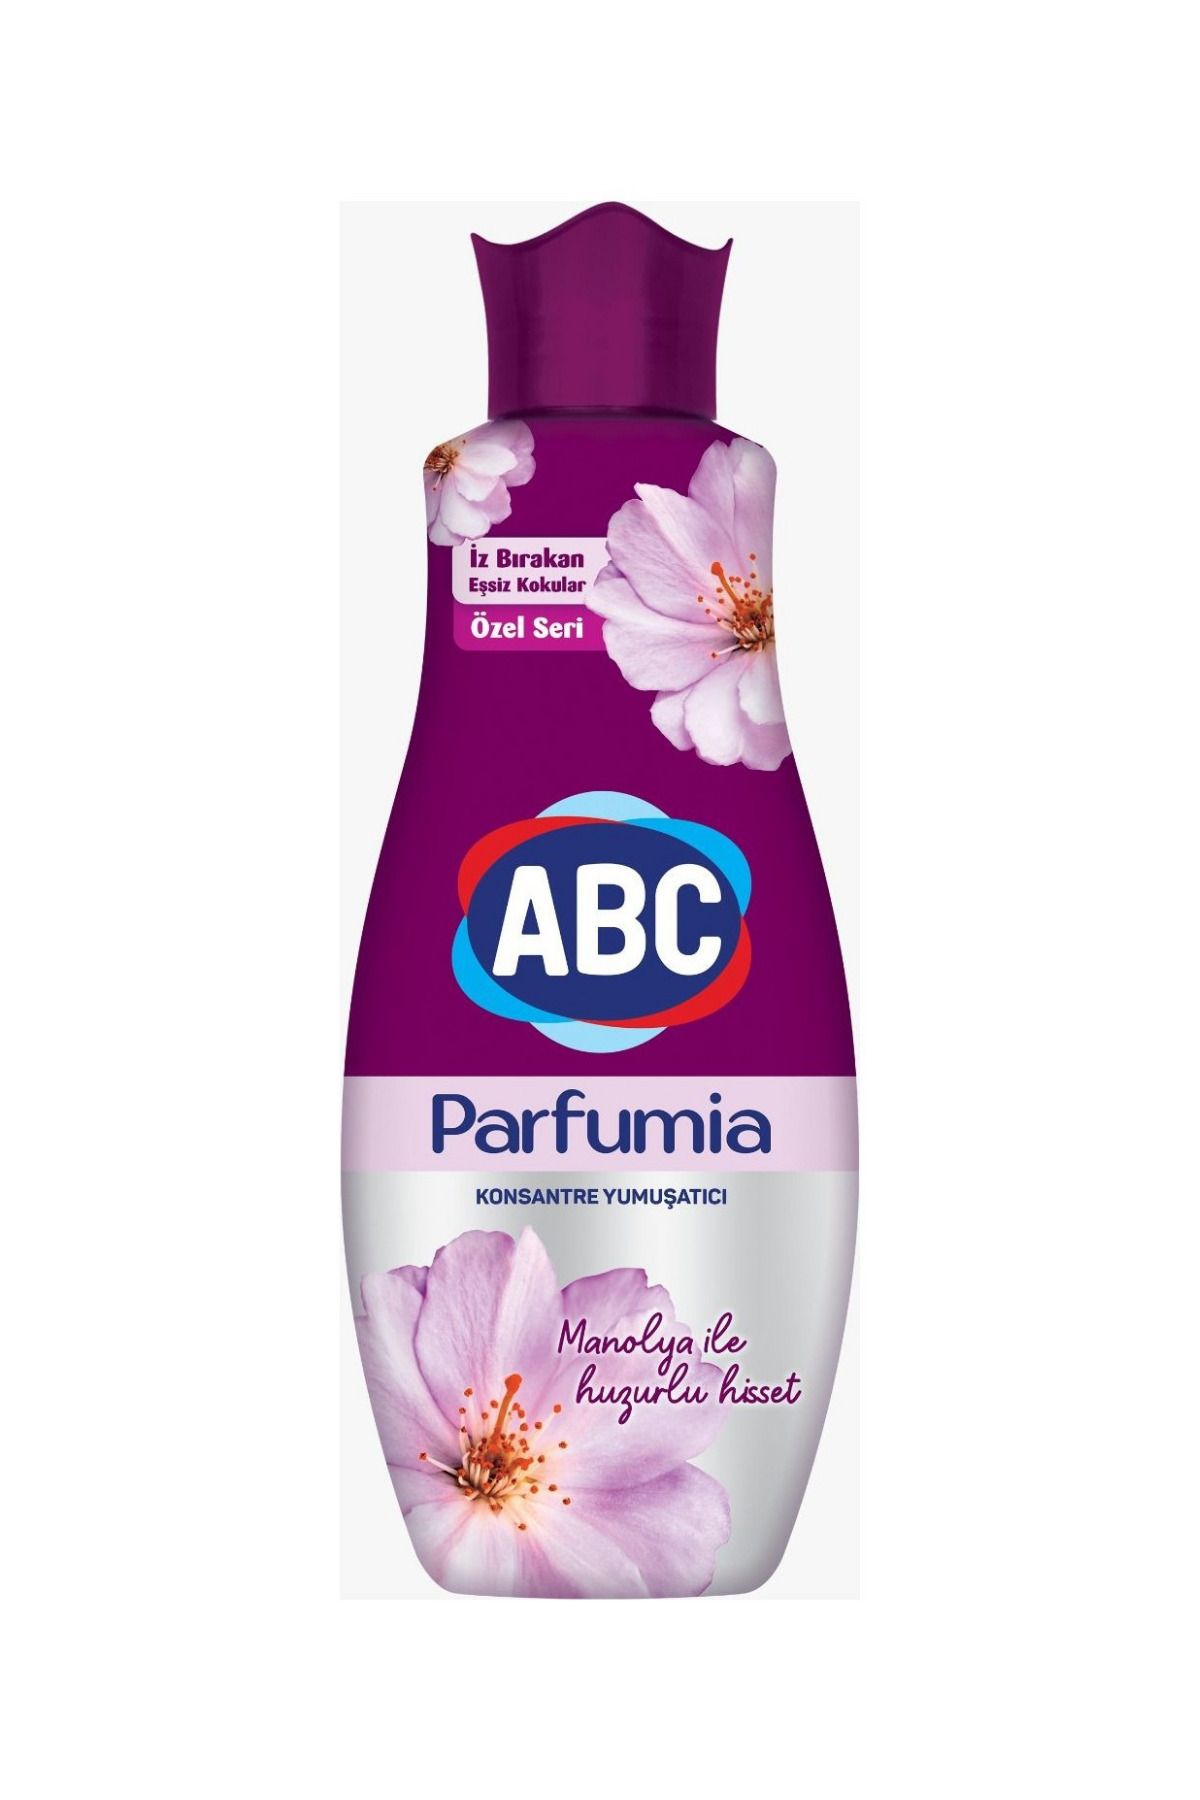 ABC Konsantre Yumuşatıcı Parfumia Manolya 1200 ml